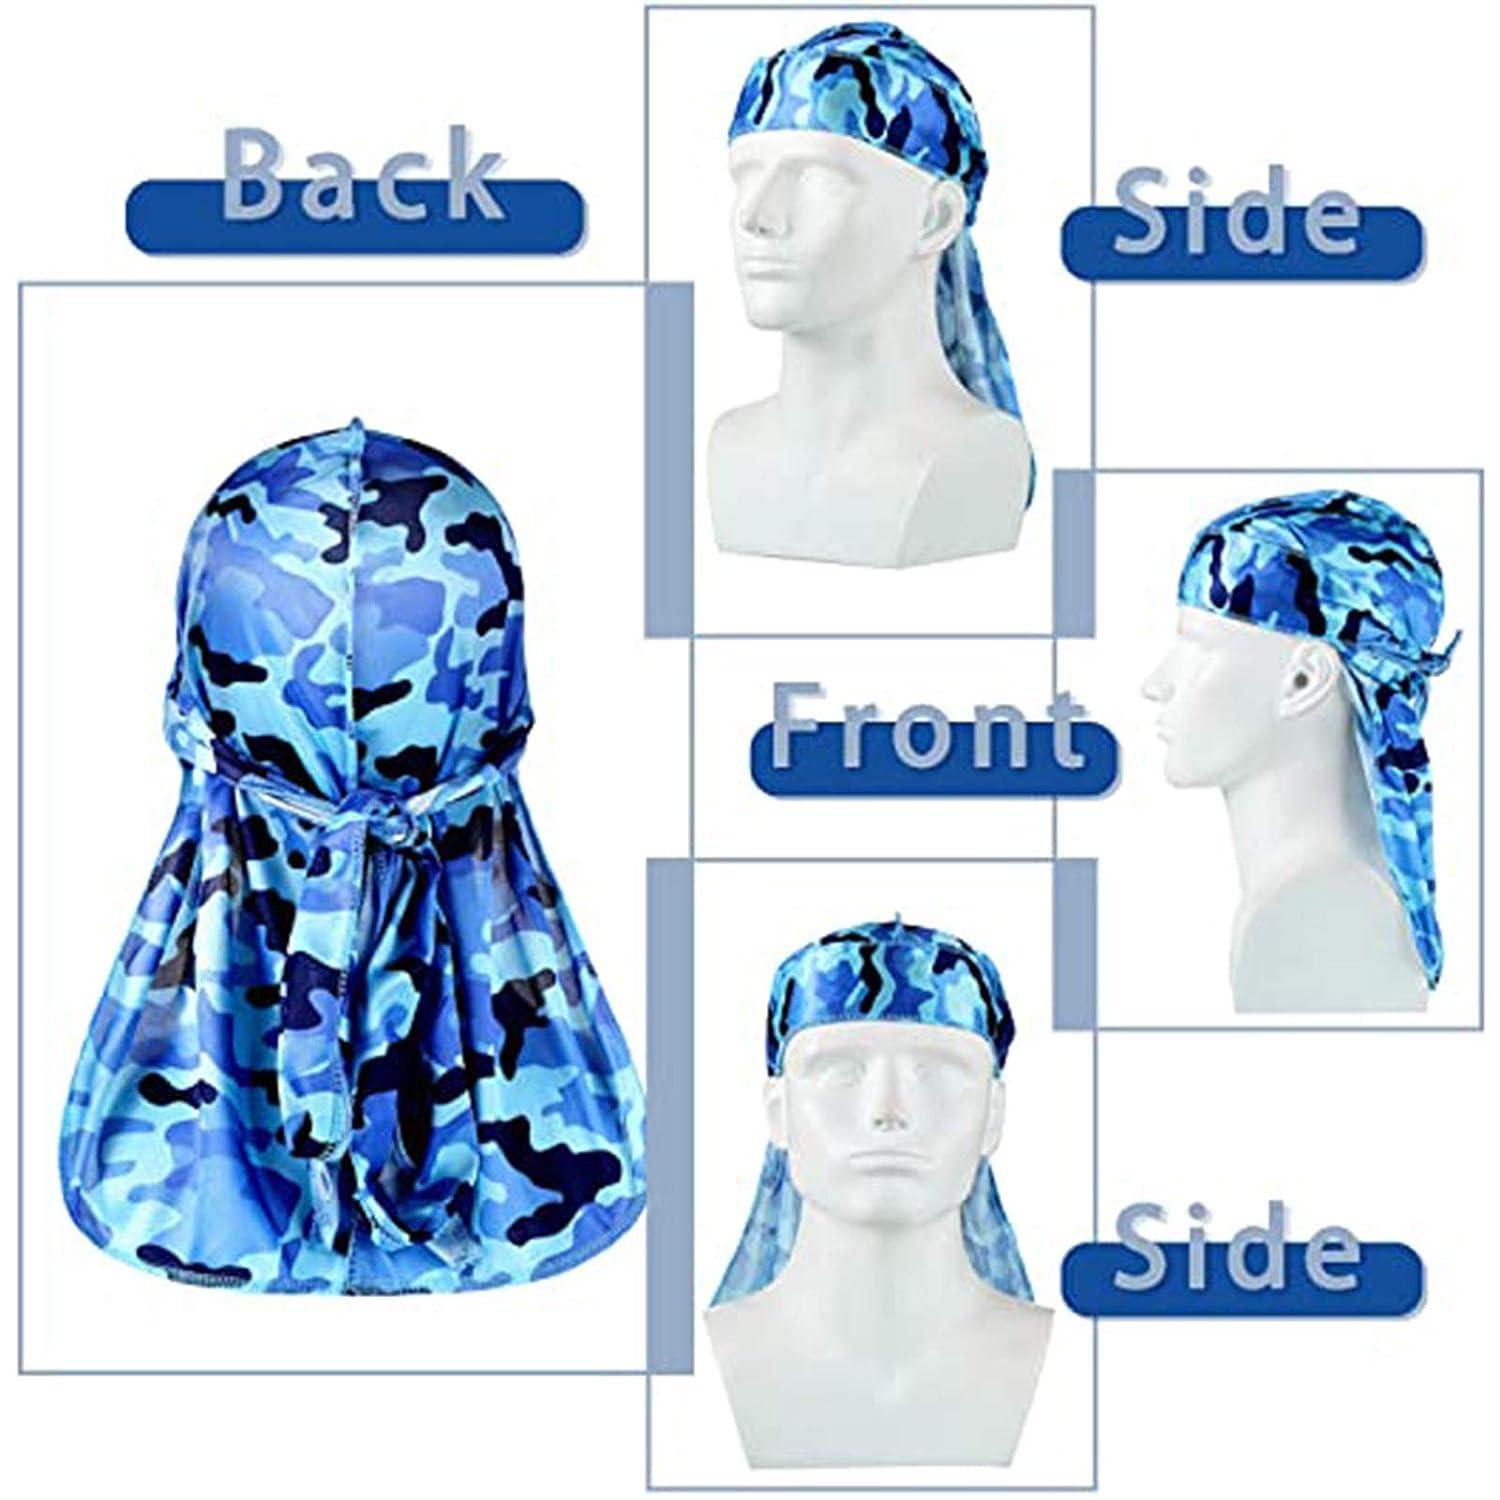 Fashion Silky Durags Turban Hat Unisex Silk Durag Headwear Bandans